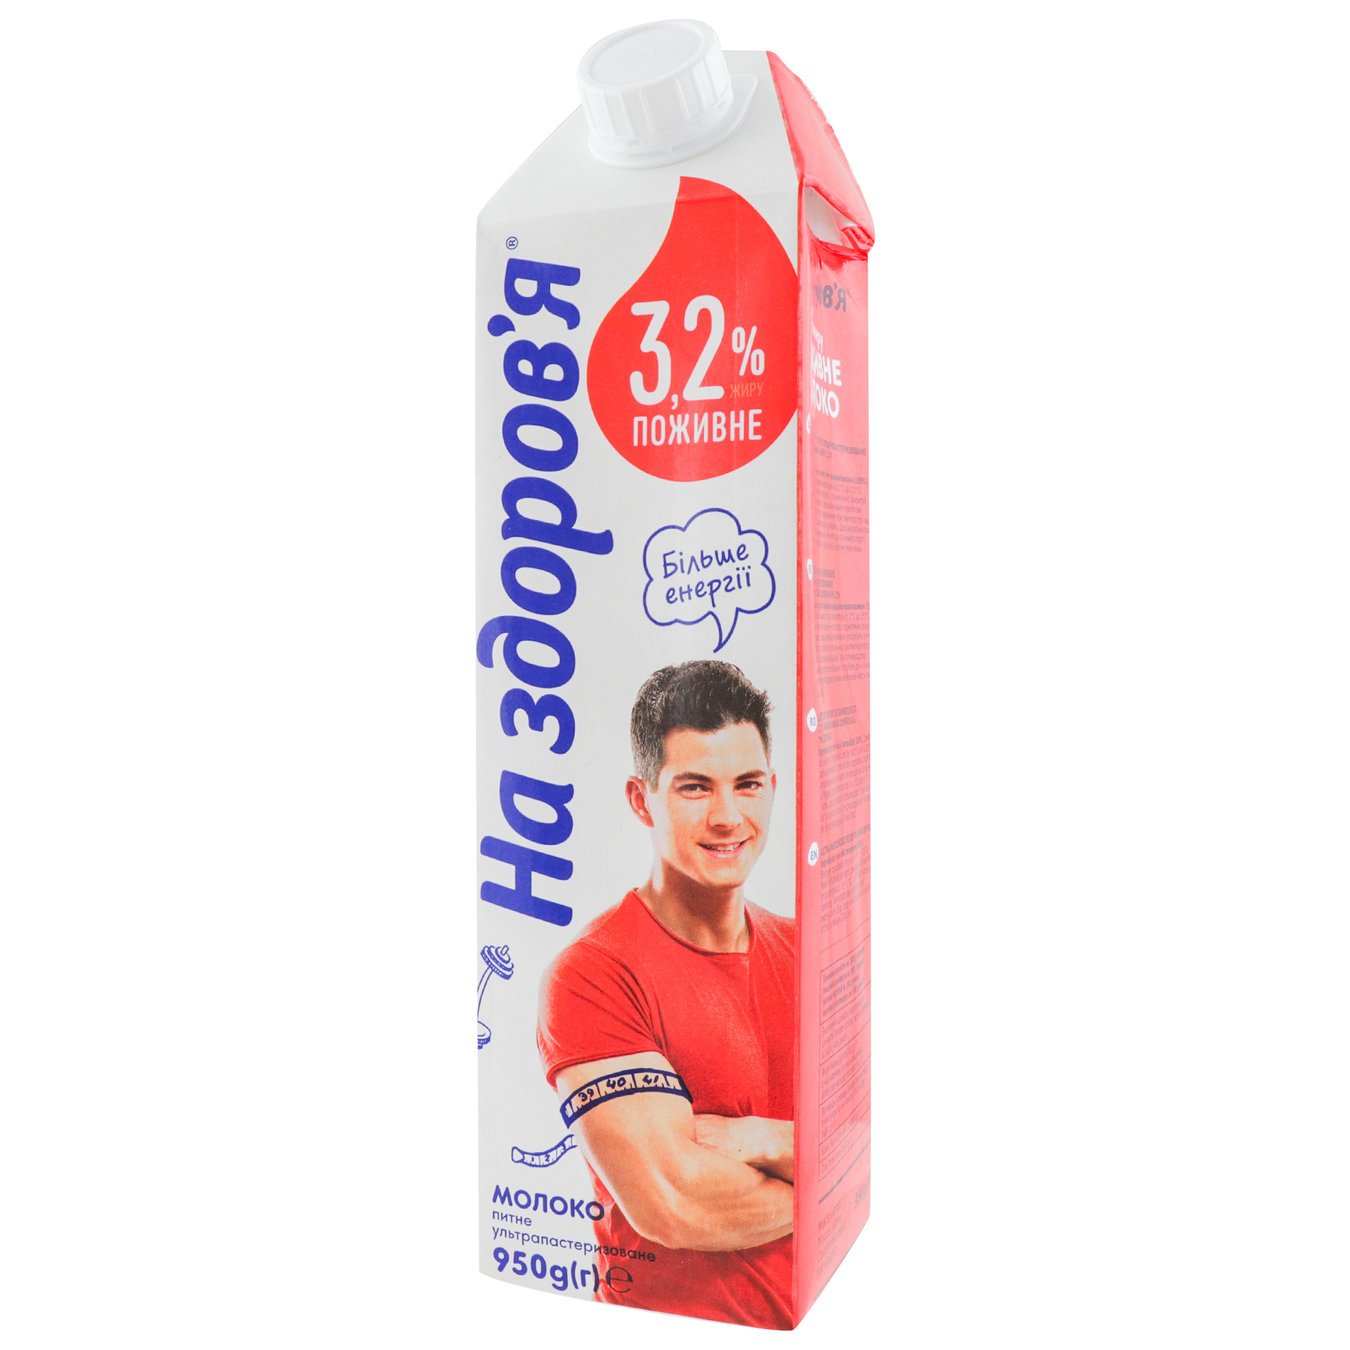 Milk Na zdorovya Ultra-pasteurized 3,2% 950g